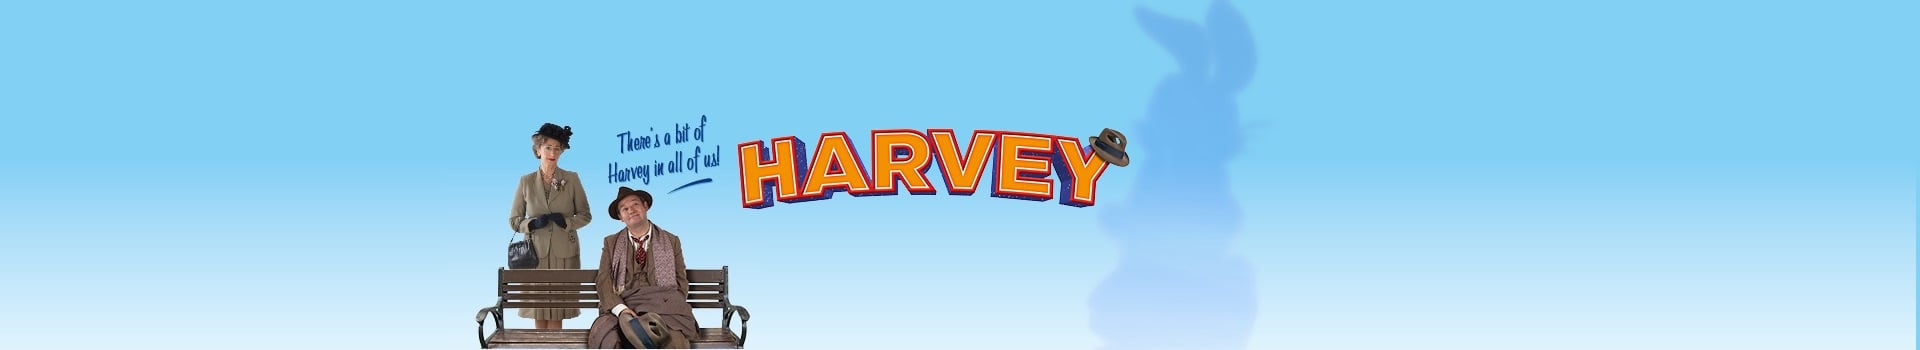 Harvey banner image